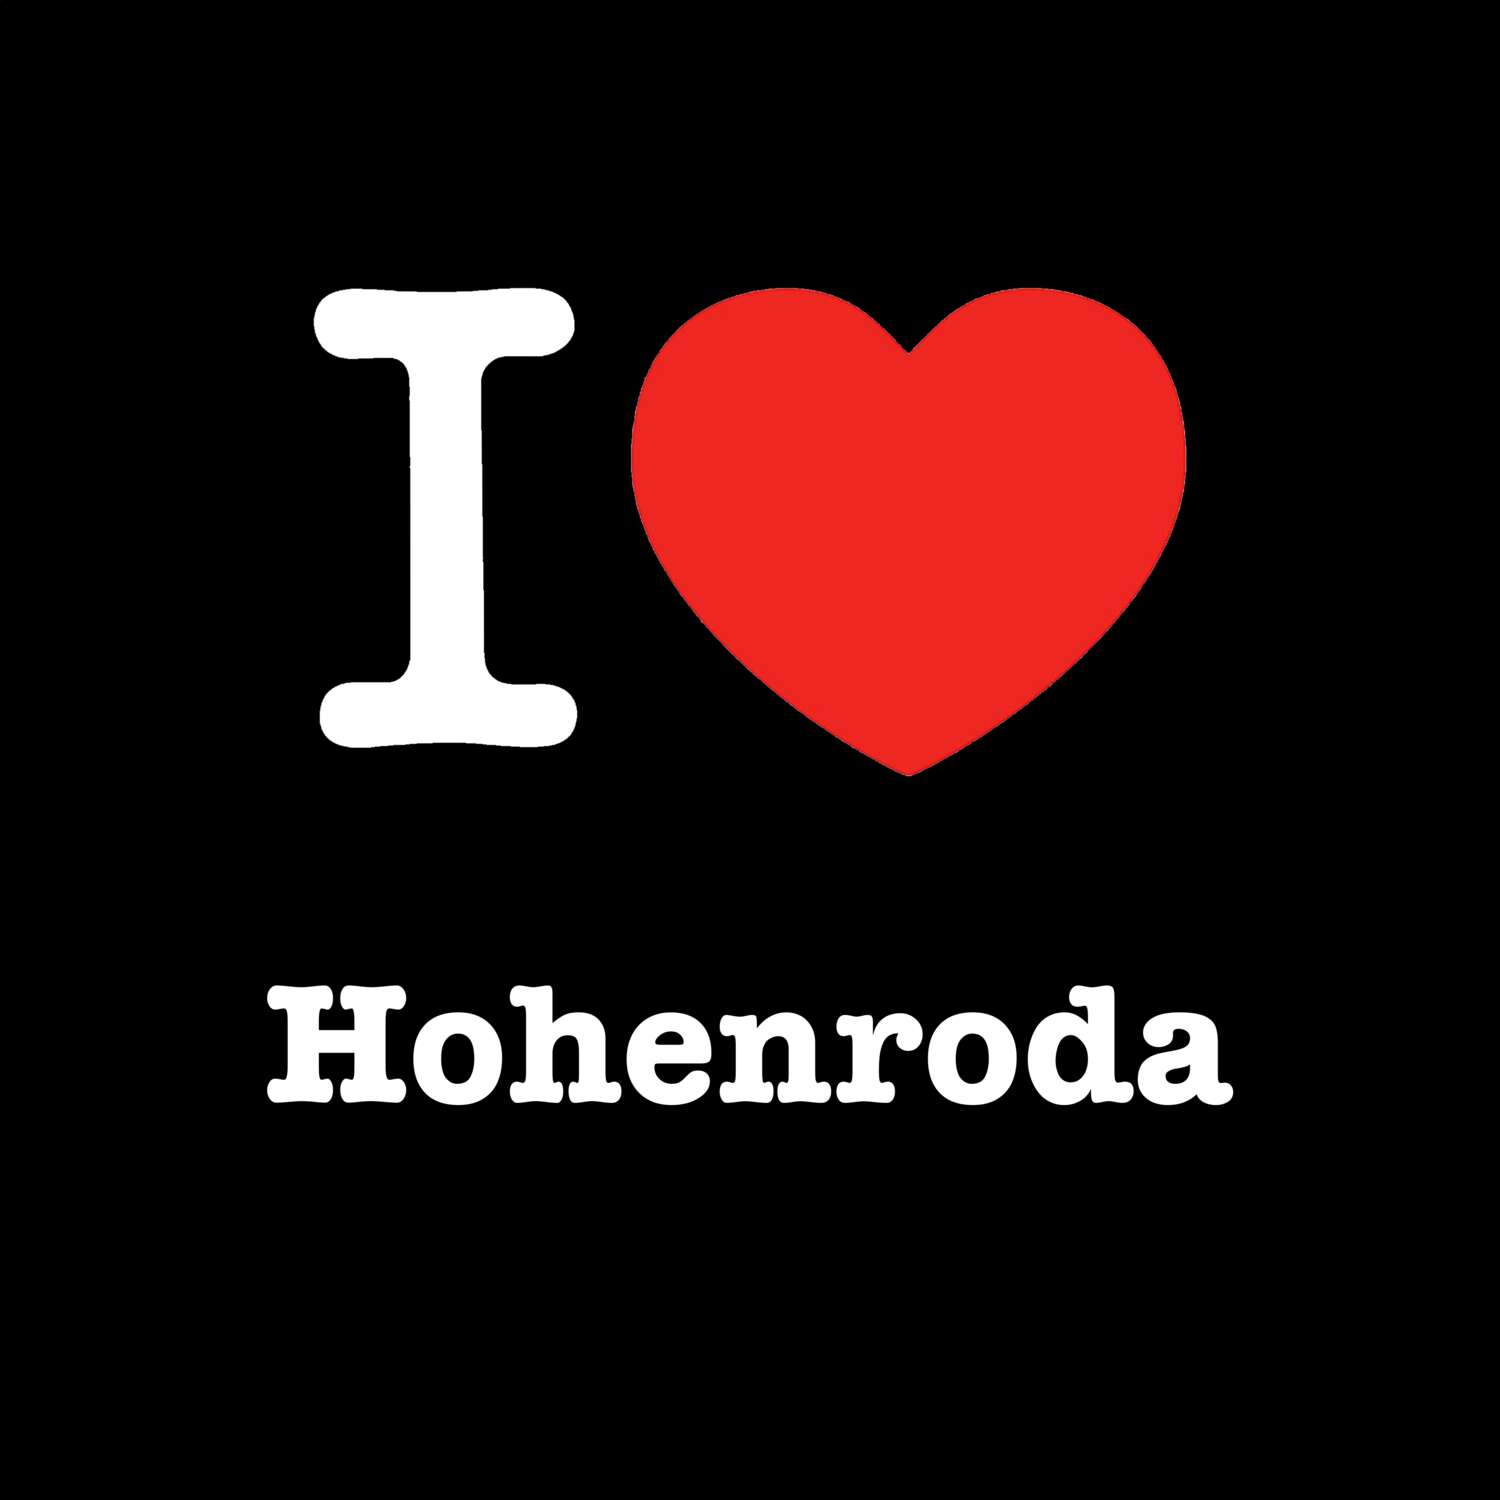 Hohenroda T-Shirt »I love«